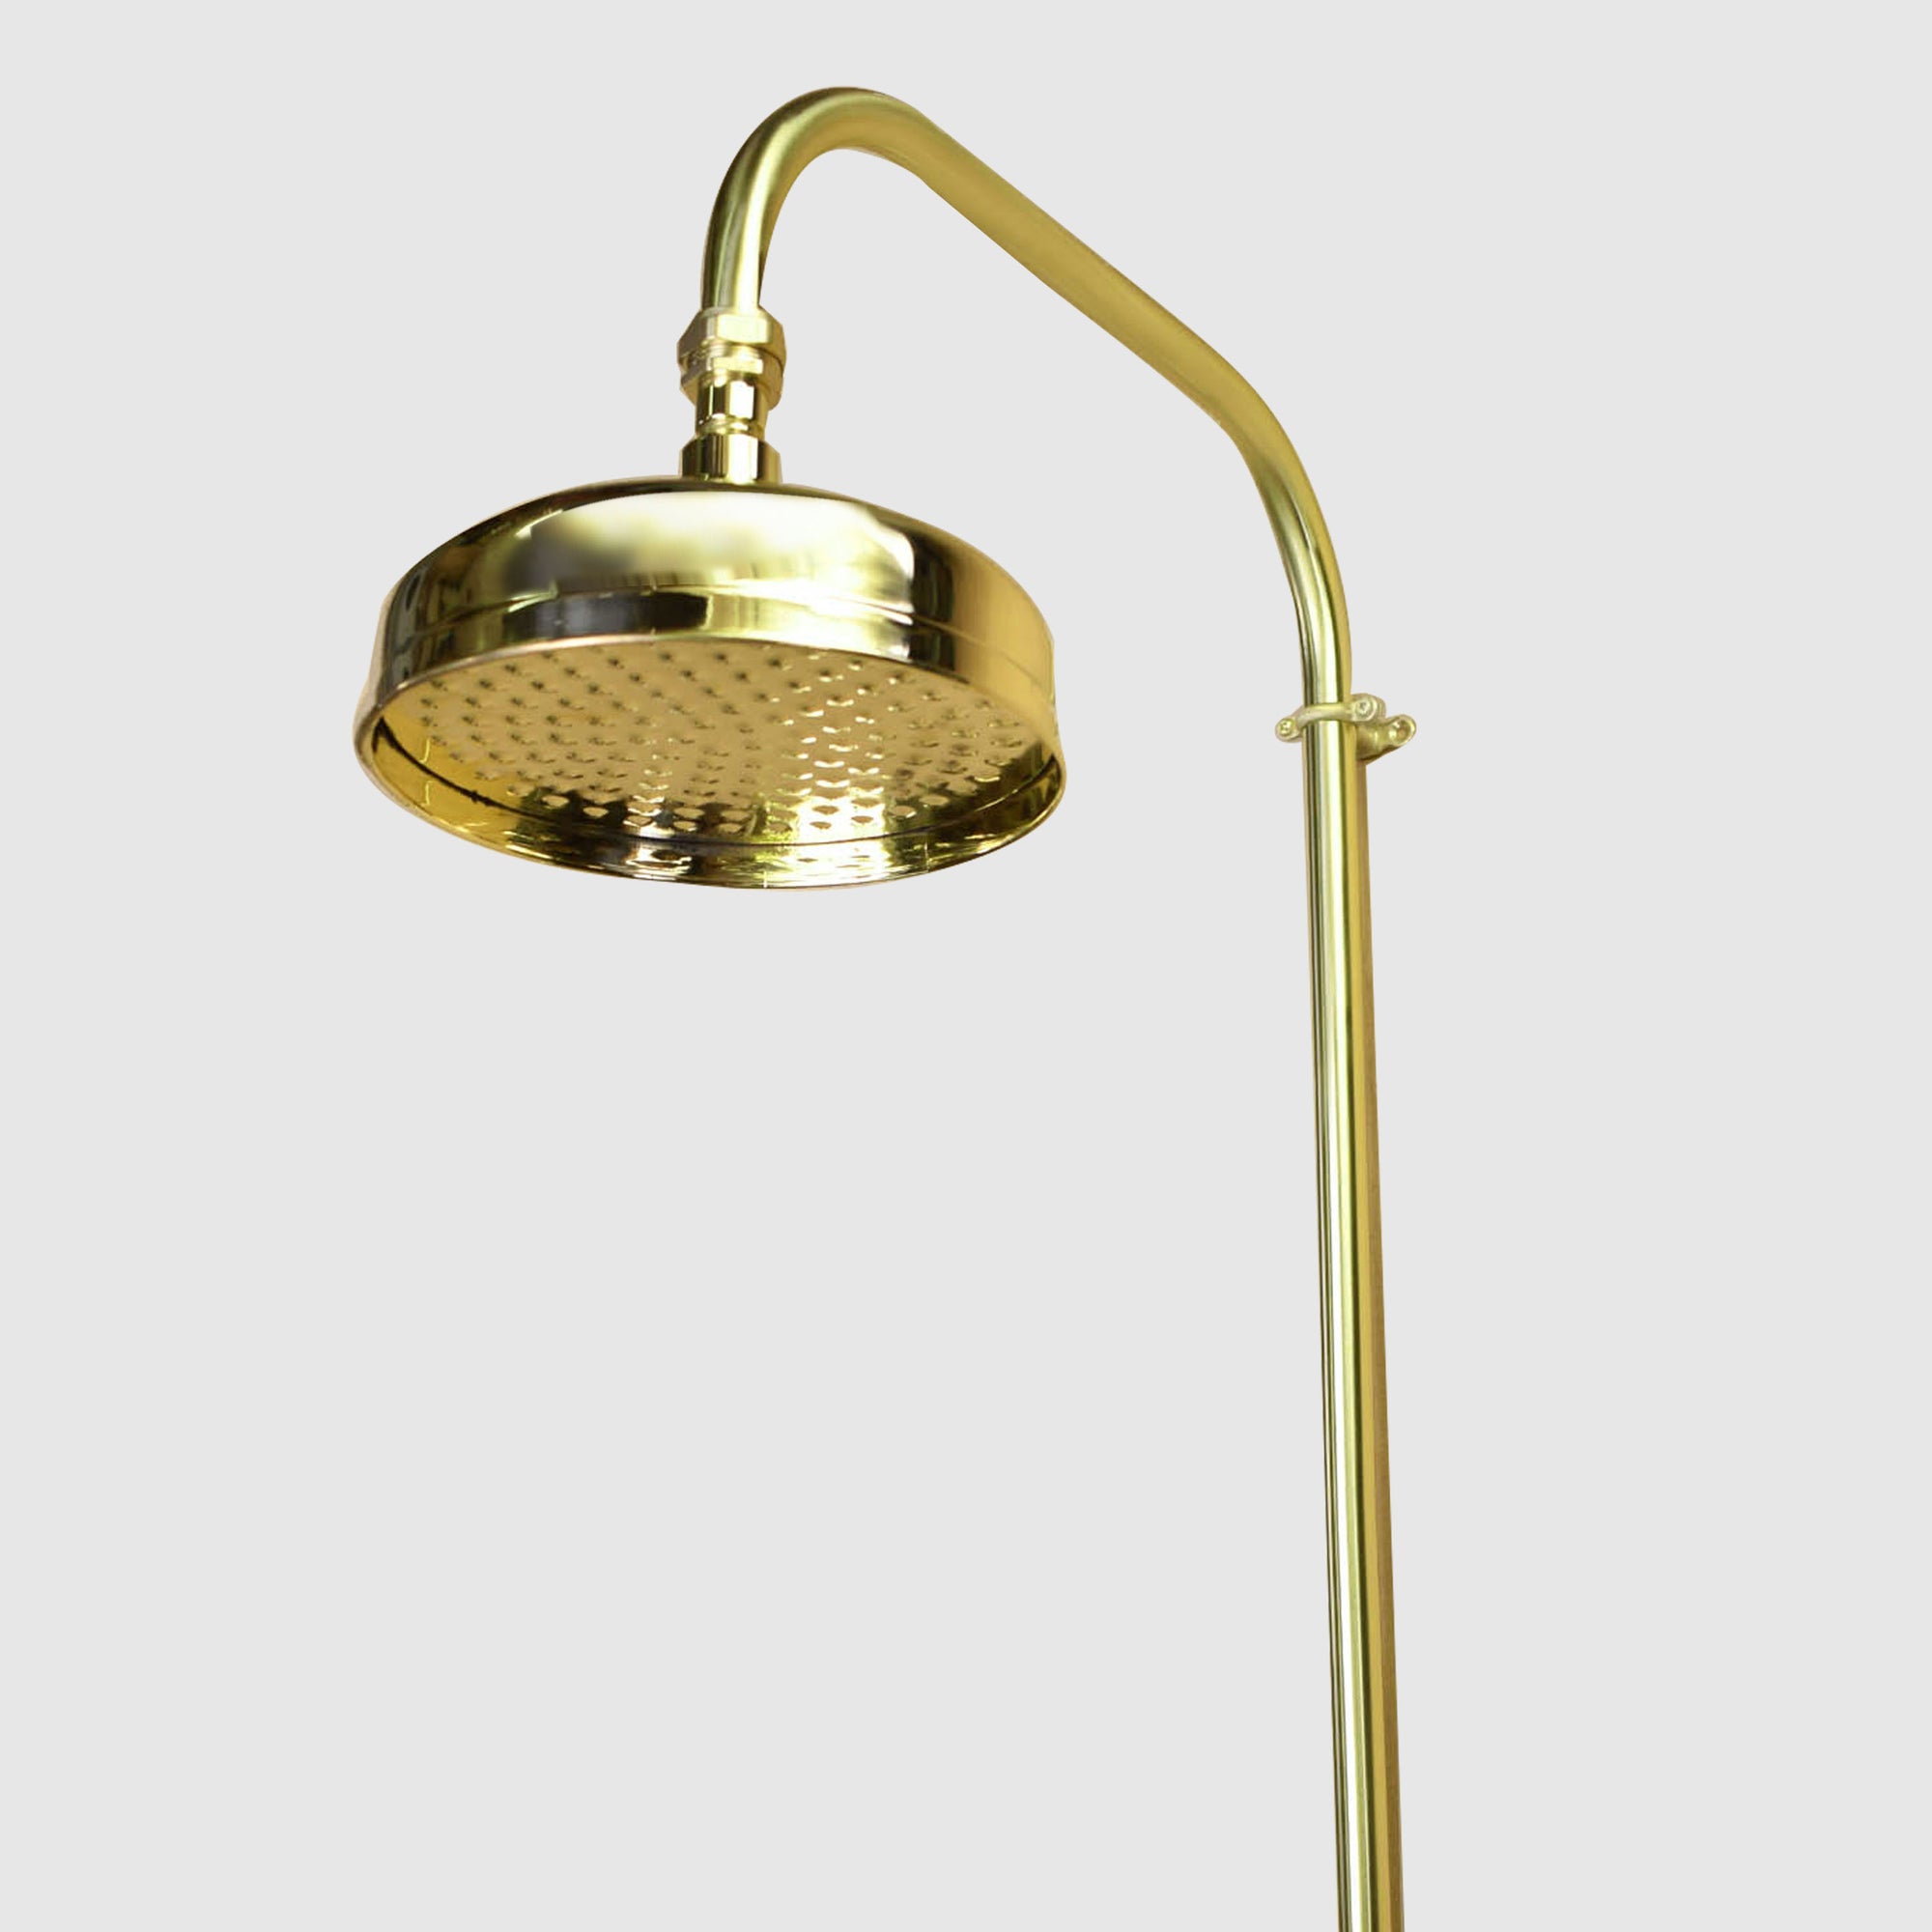 Brass Shower Head - Large Traditional Bell - Proper Copper Design